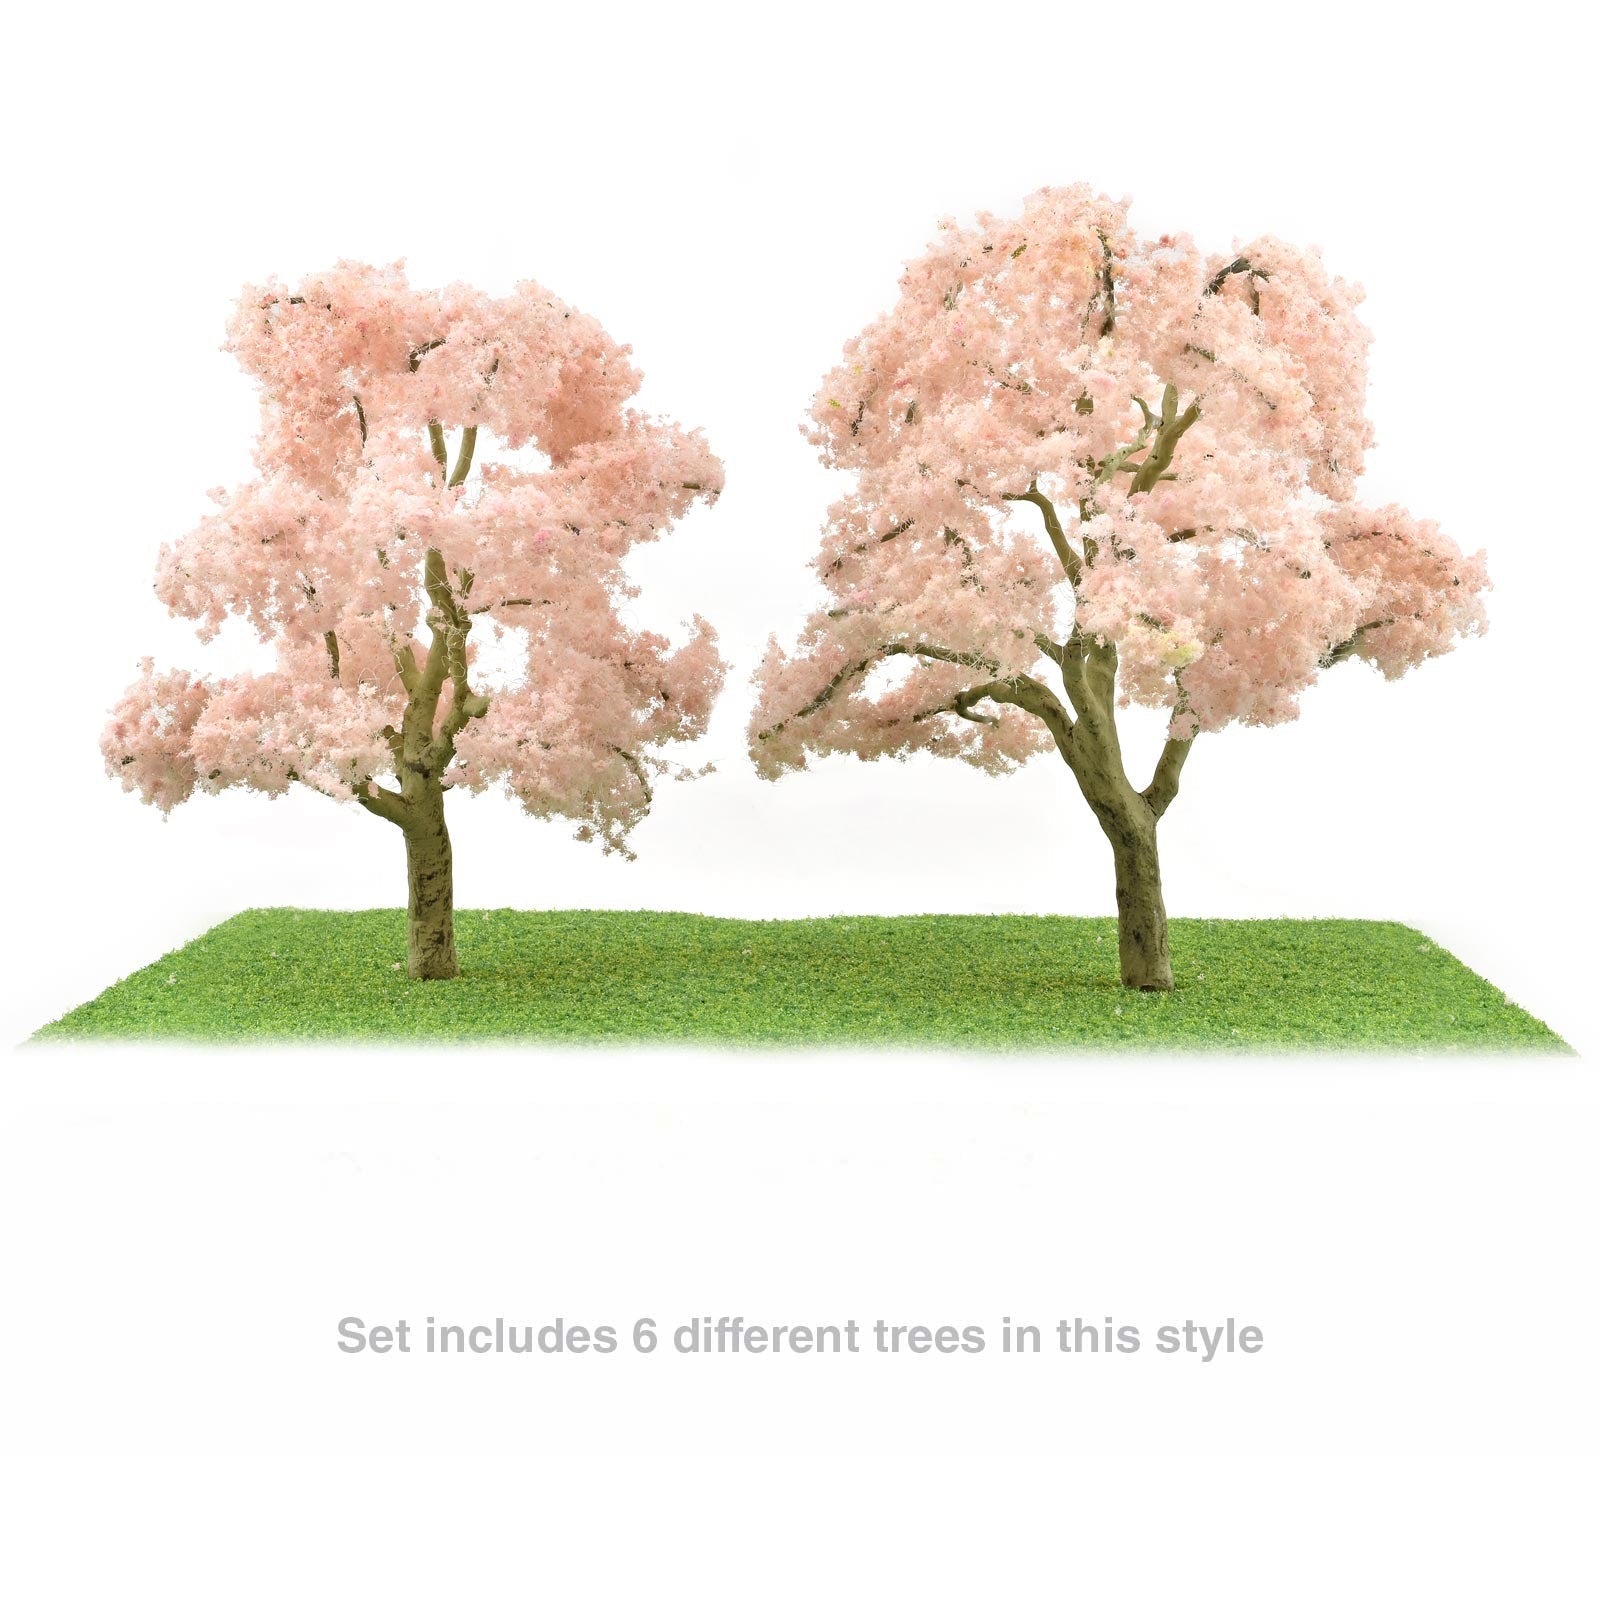 JTT Scenery Products Cherry Blossom Grove 3-3 1/2" High, 6 Pcs